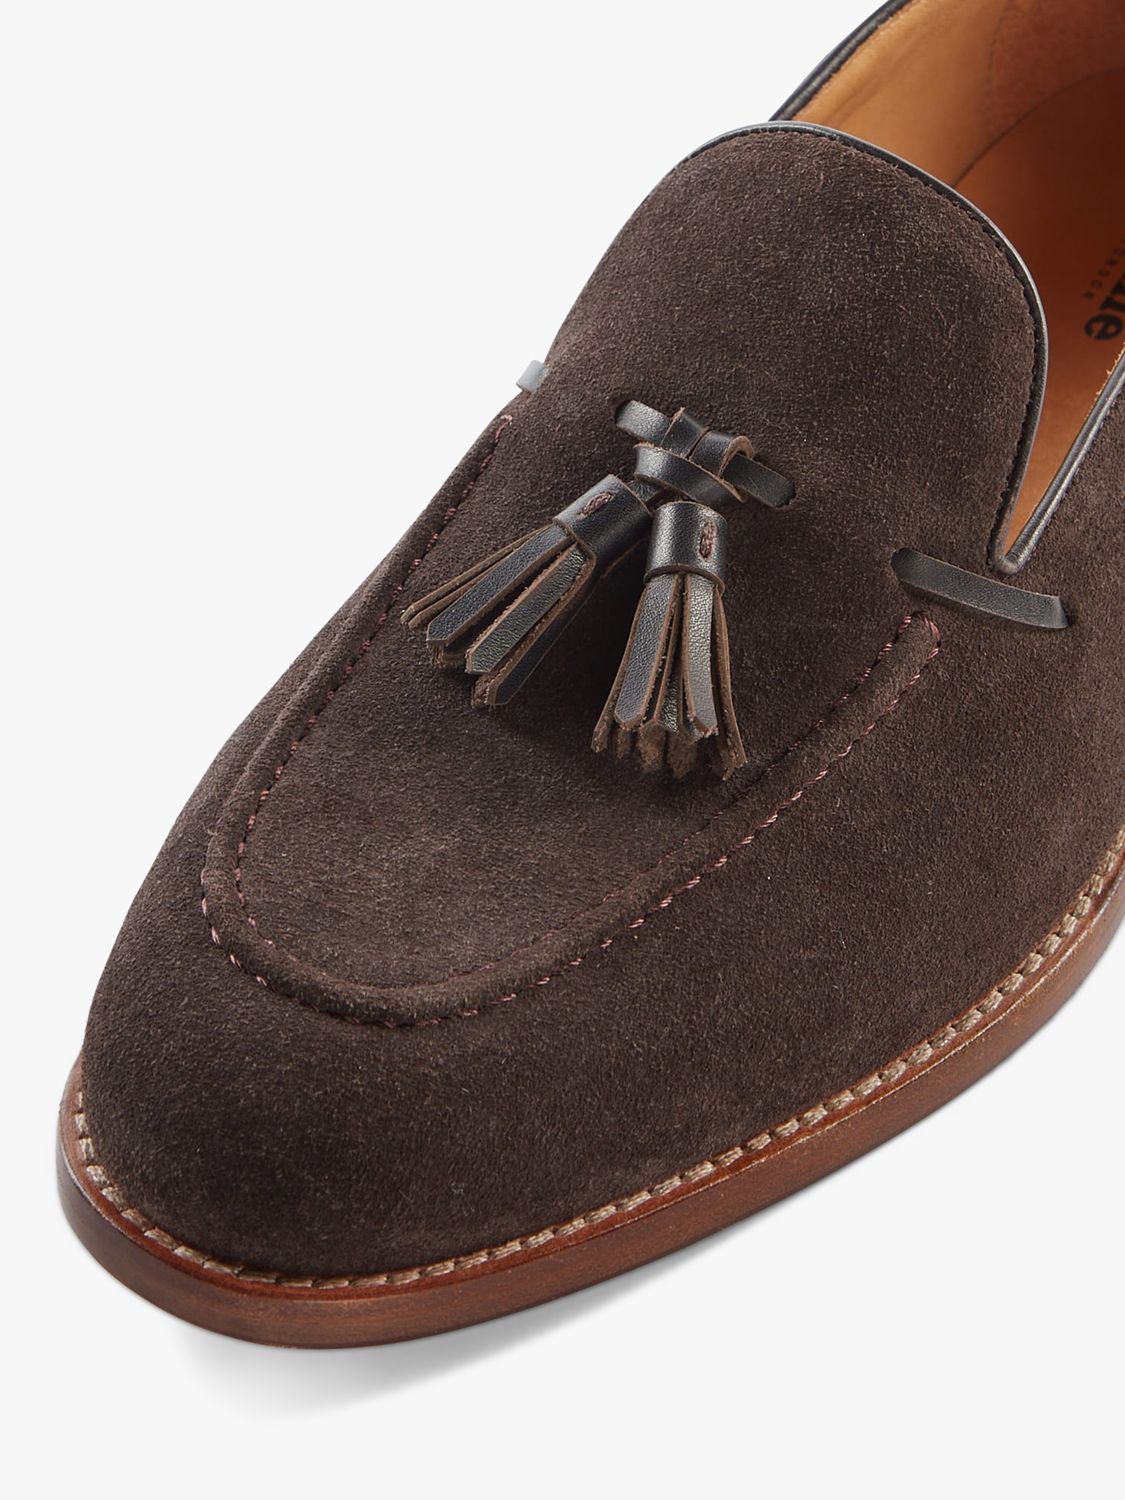 Dune Sandders Leather Tassel Loafers, Brown, 6